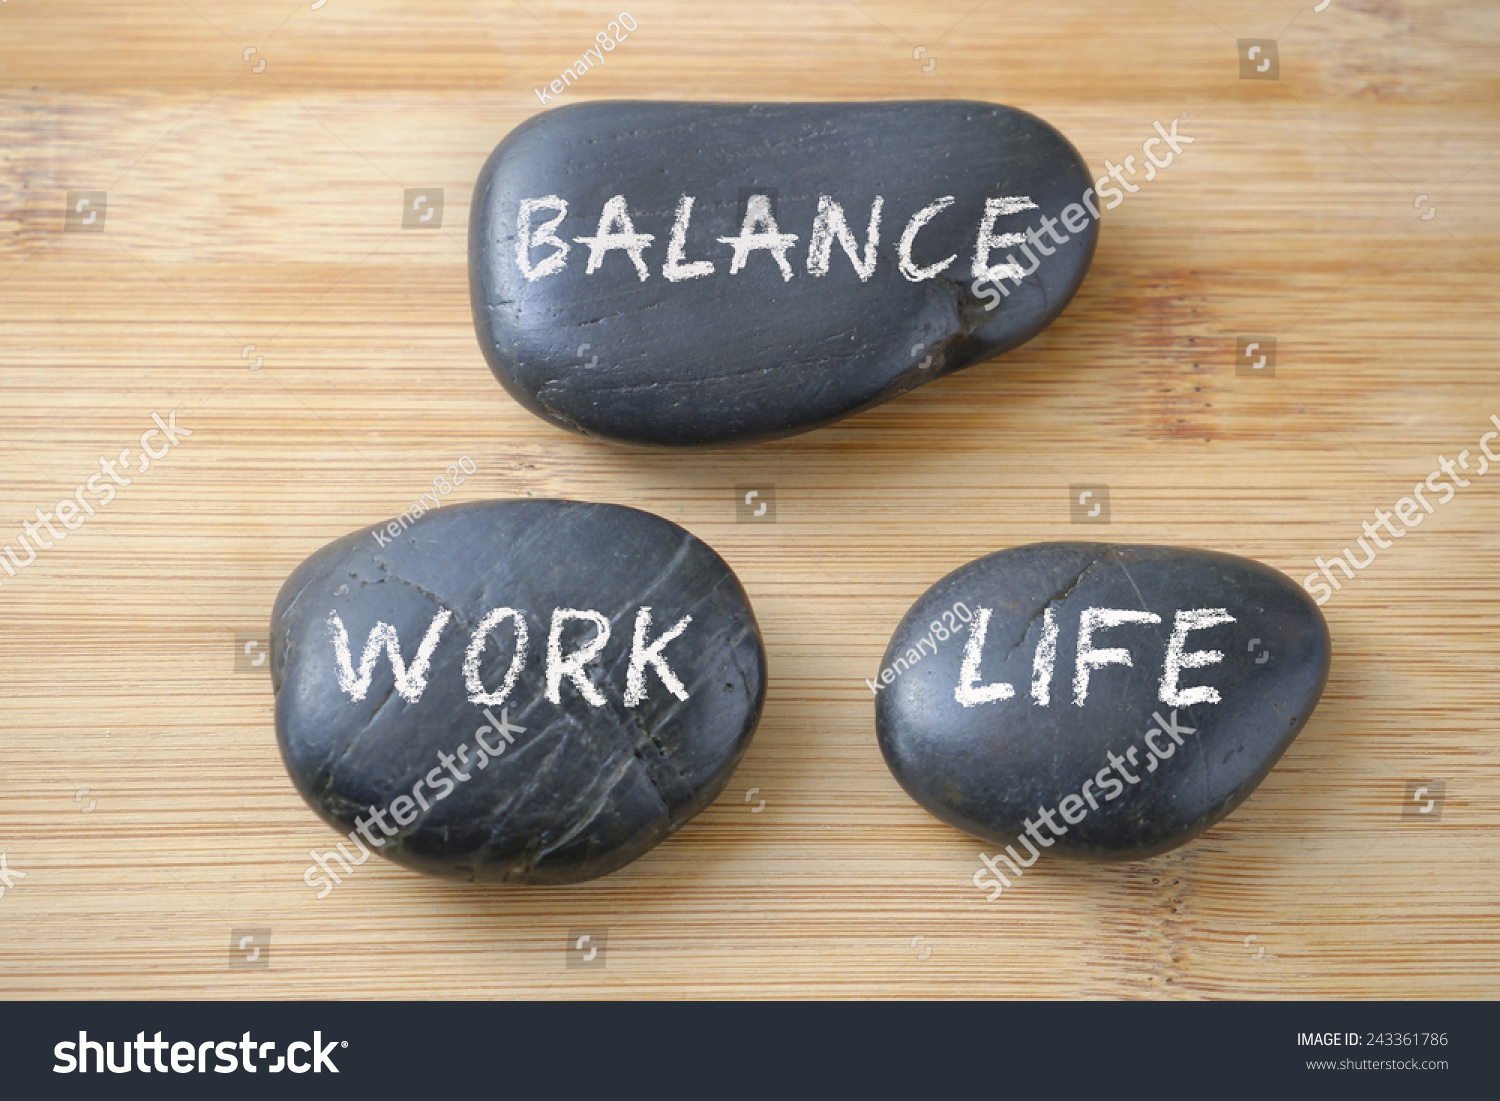 Work-Life Balance concept. #243361786